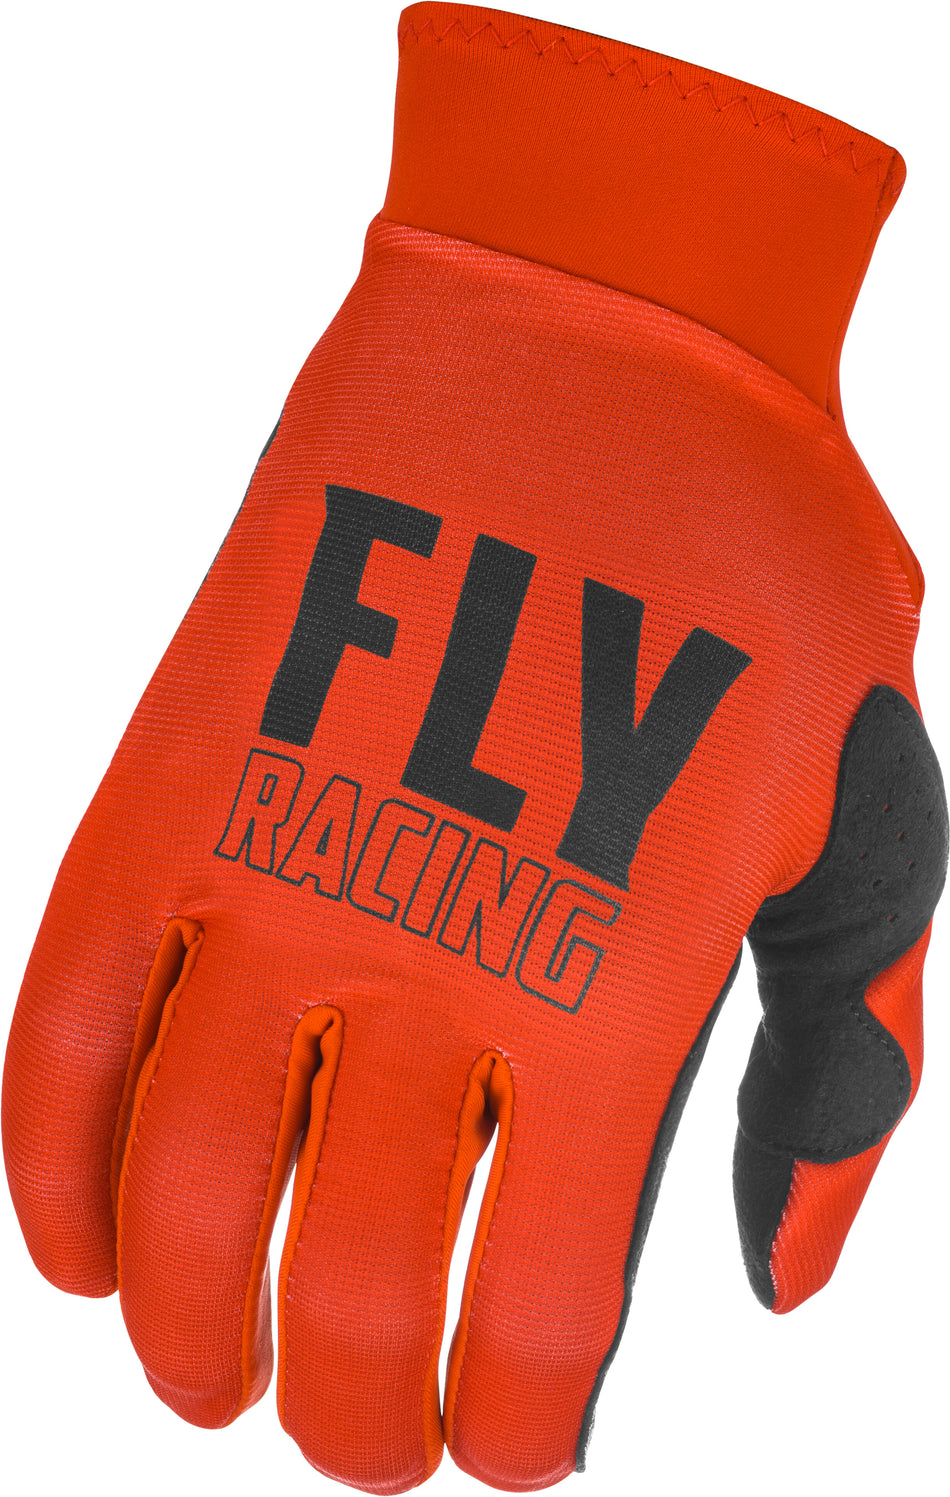 FLY RACING Pro Lite Gloves Red/Black Lg 374-852L